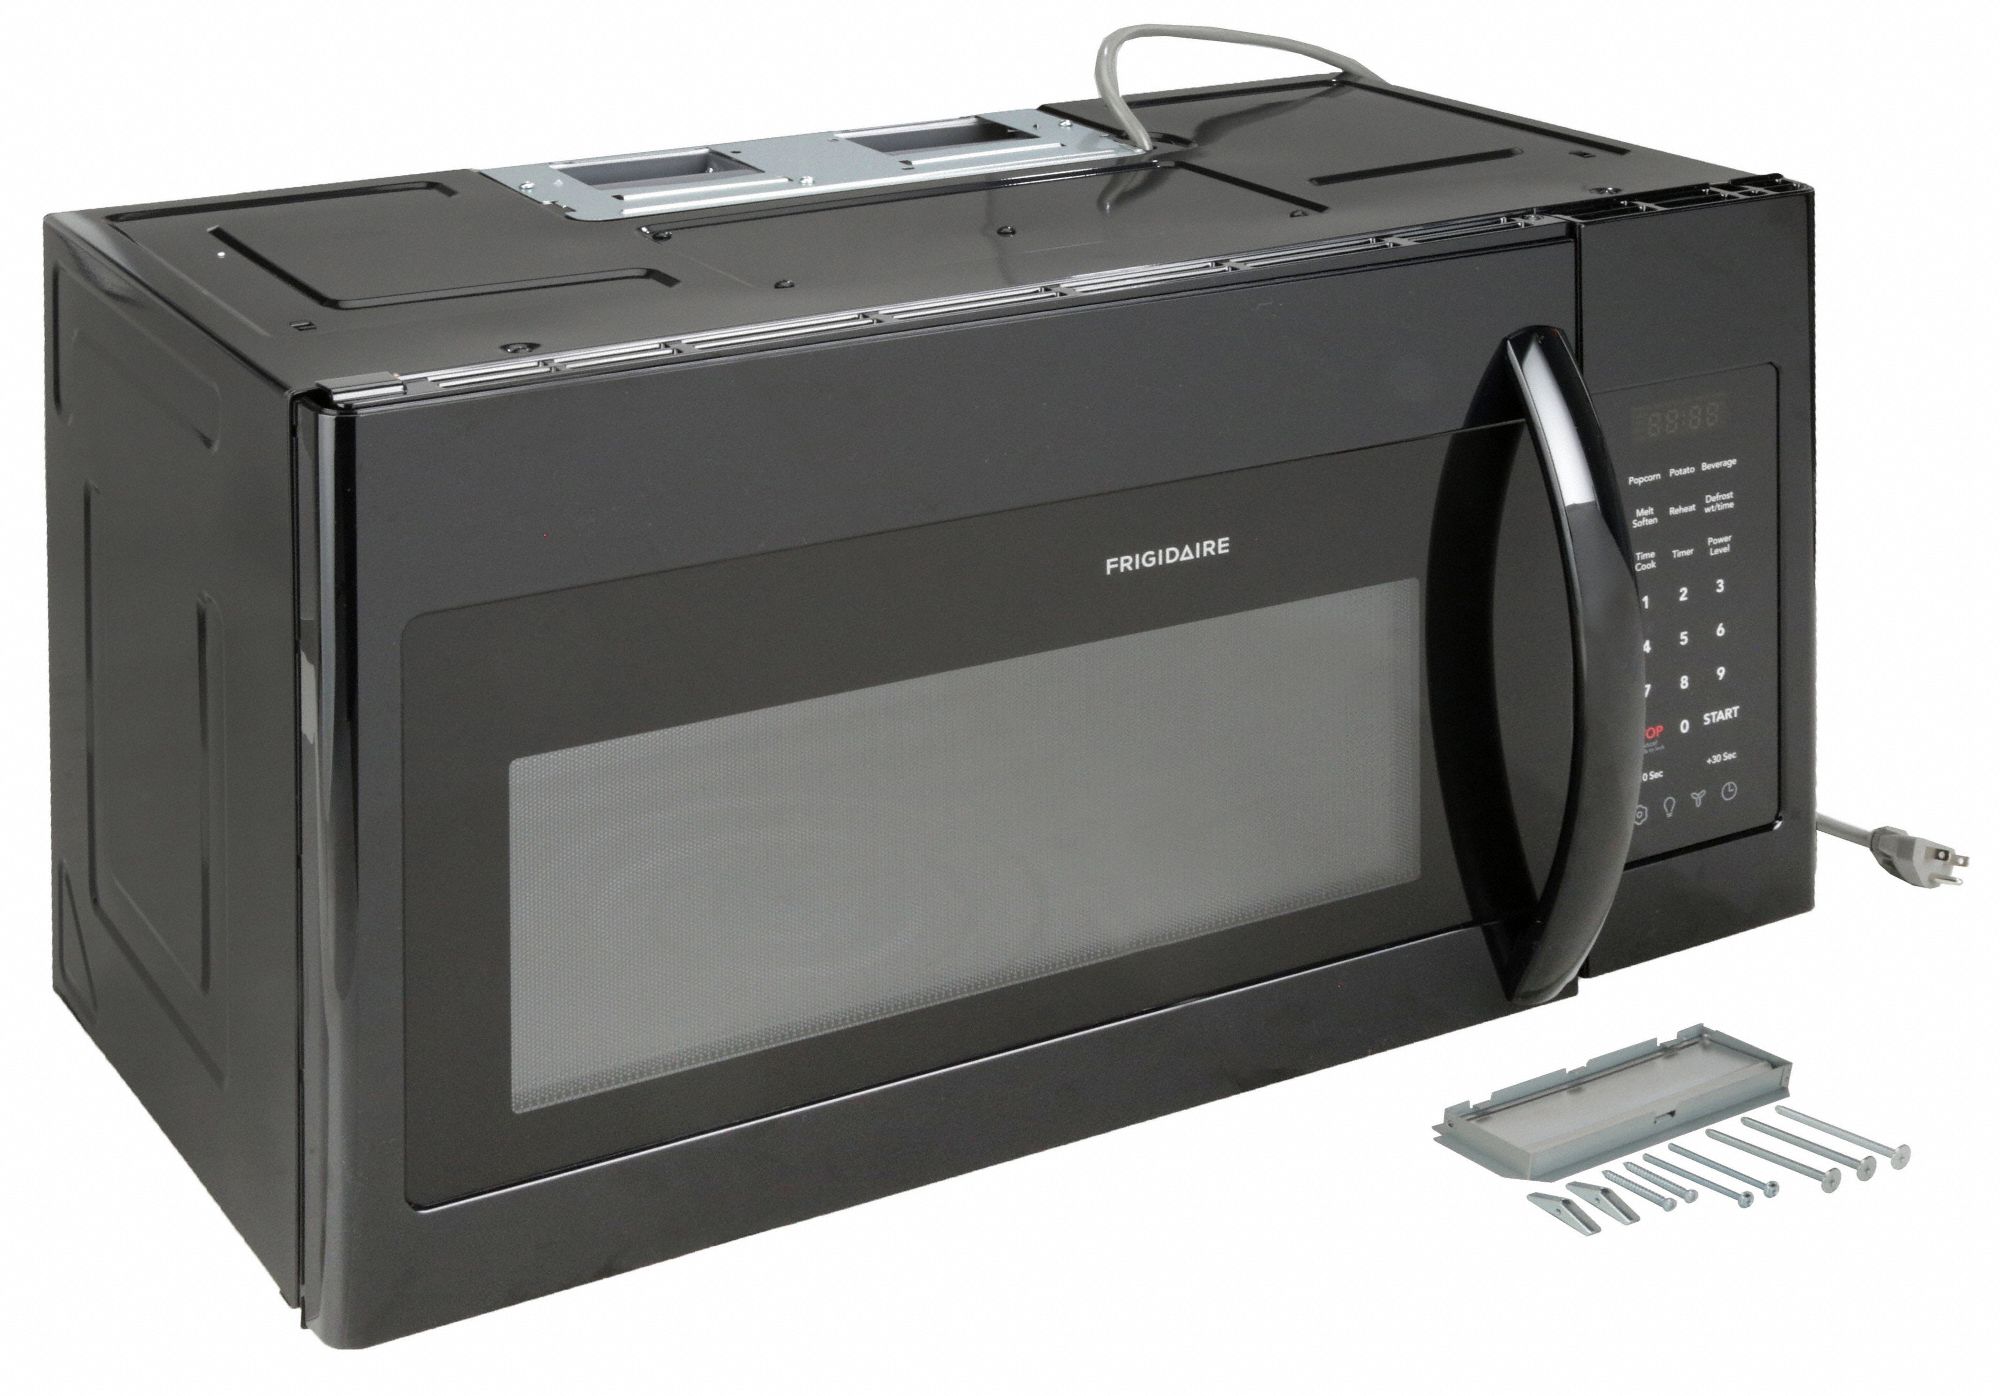 FRIGIDAIRE, Black, 1.8 cu ft Oven Capacity, Microwave - 55MK40